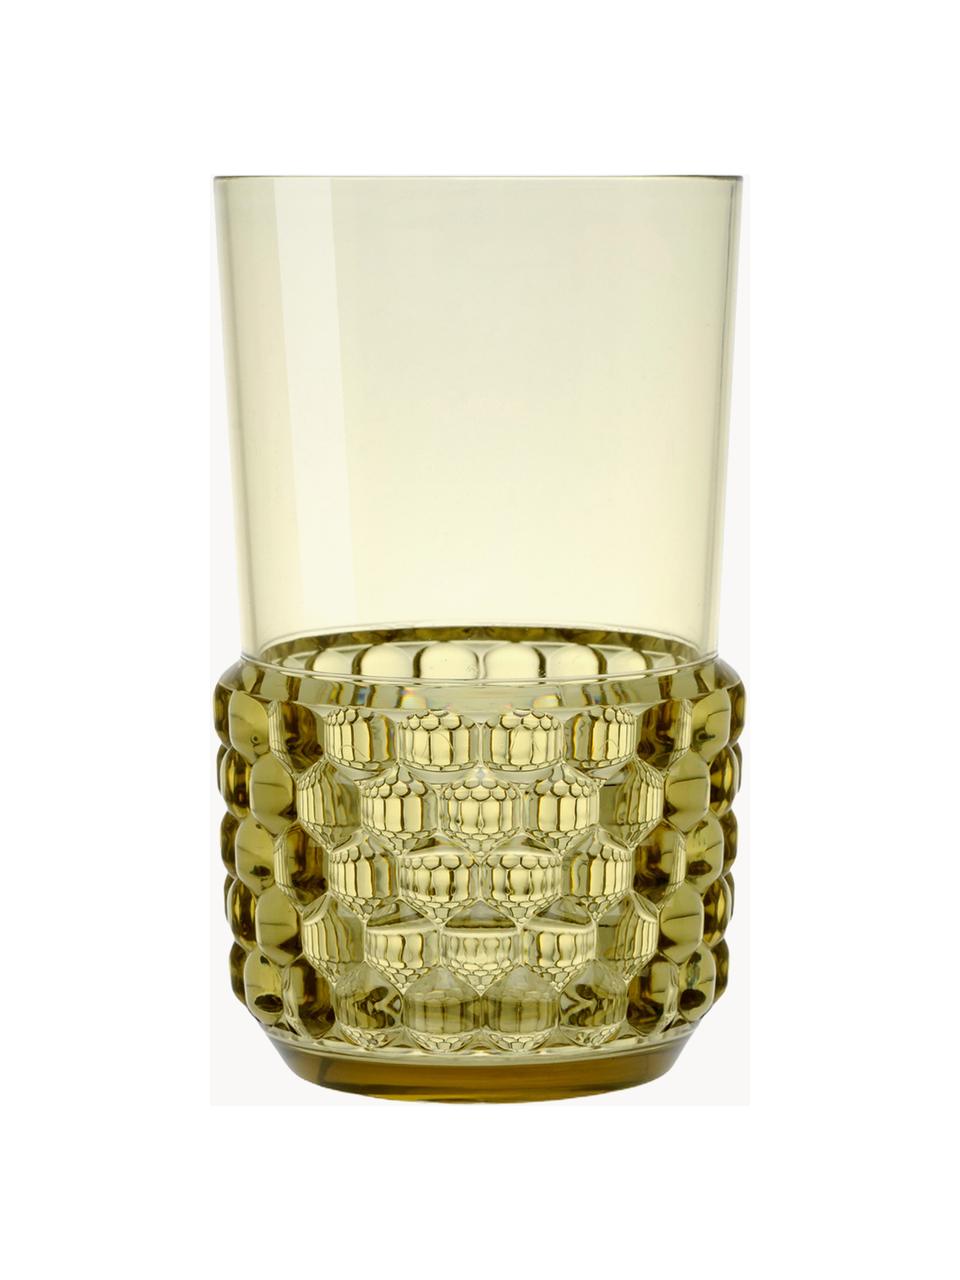 Bicchieri con motivo strutturato Jellies 4 pz, Plastica, Verde oliva, Ø 9 x Alt. 15 cm, 600 ml